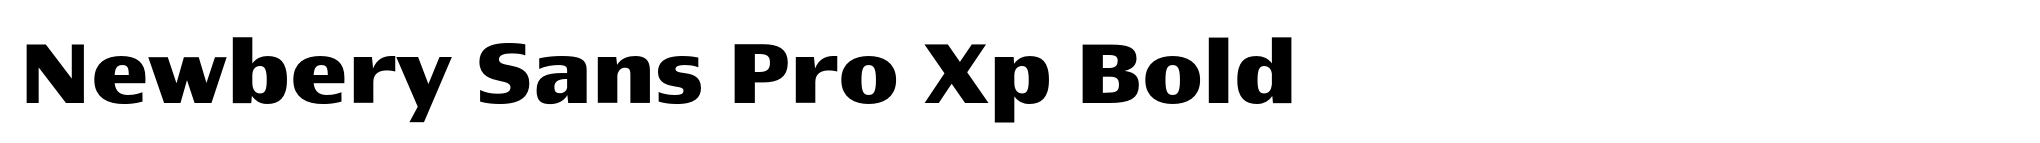 Newbery Sans Pro Xp Bold image